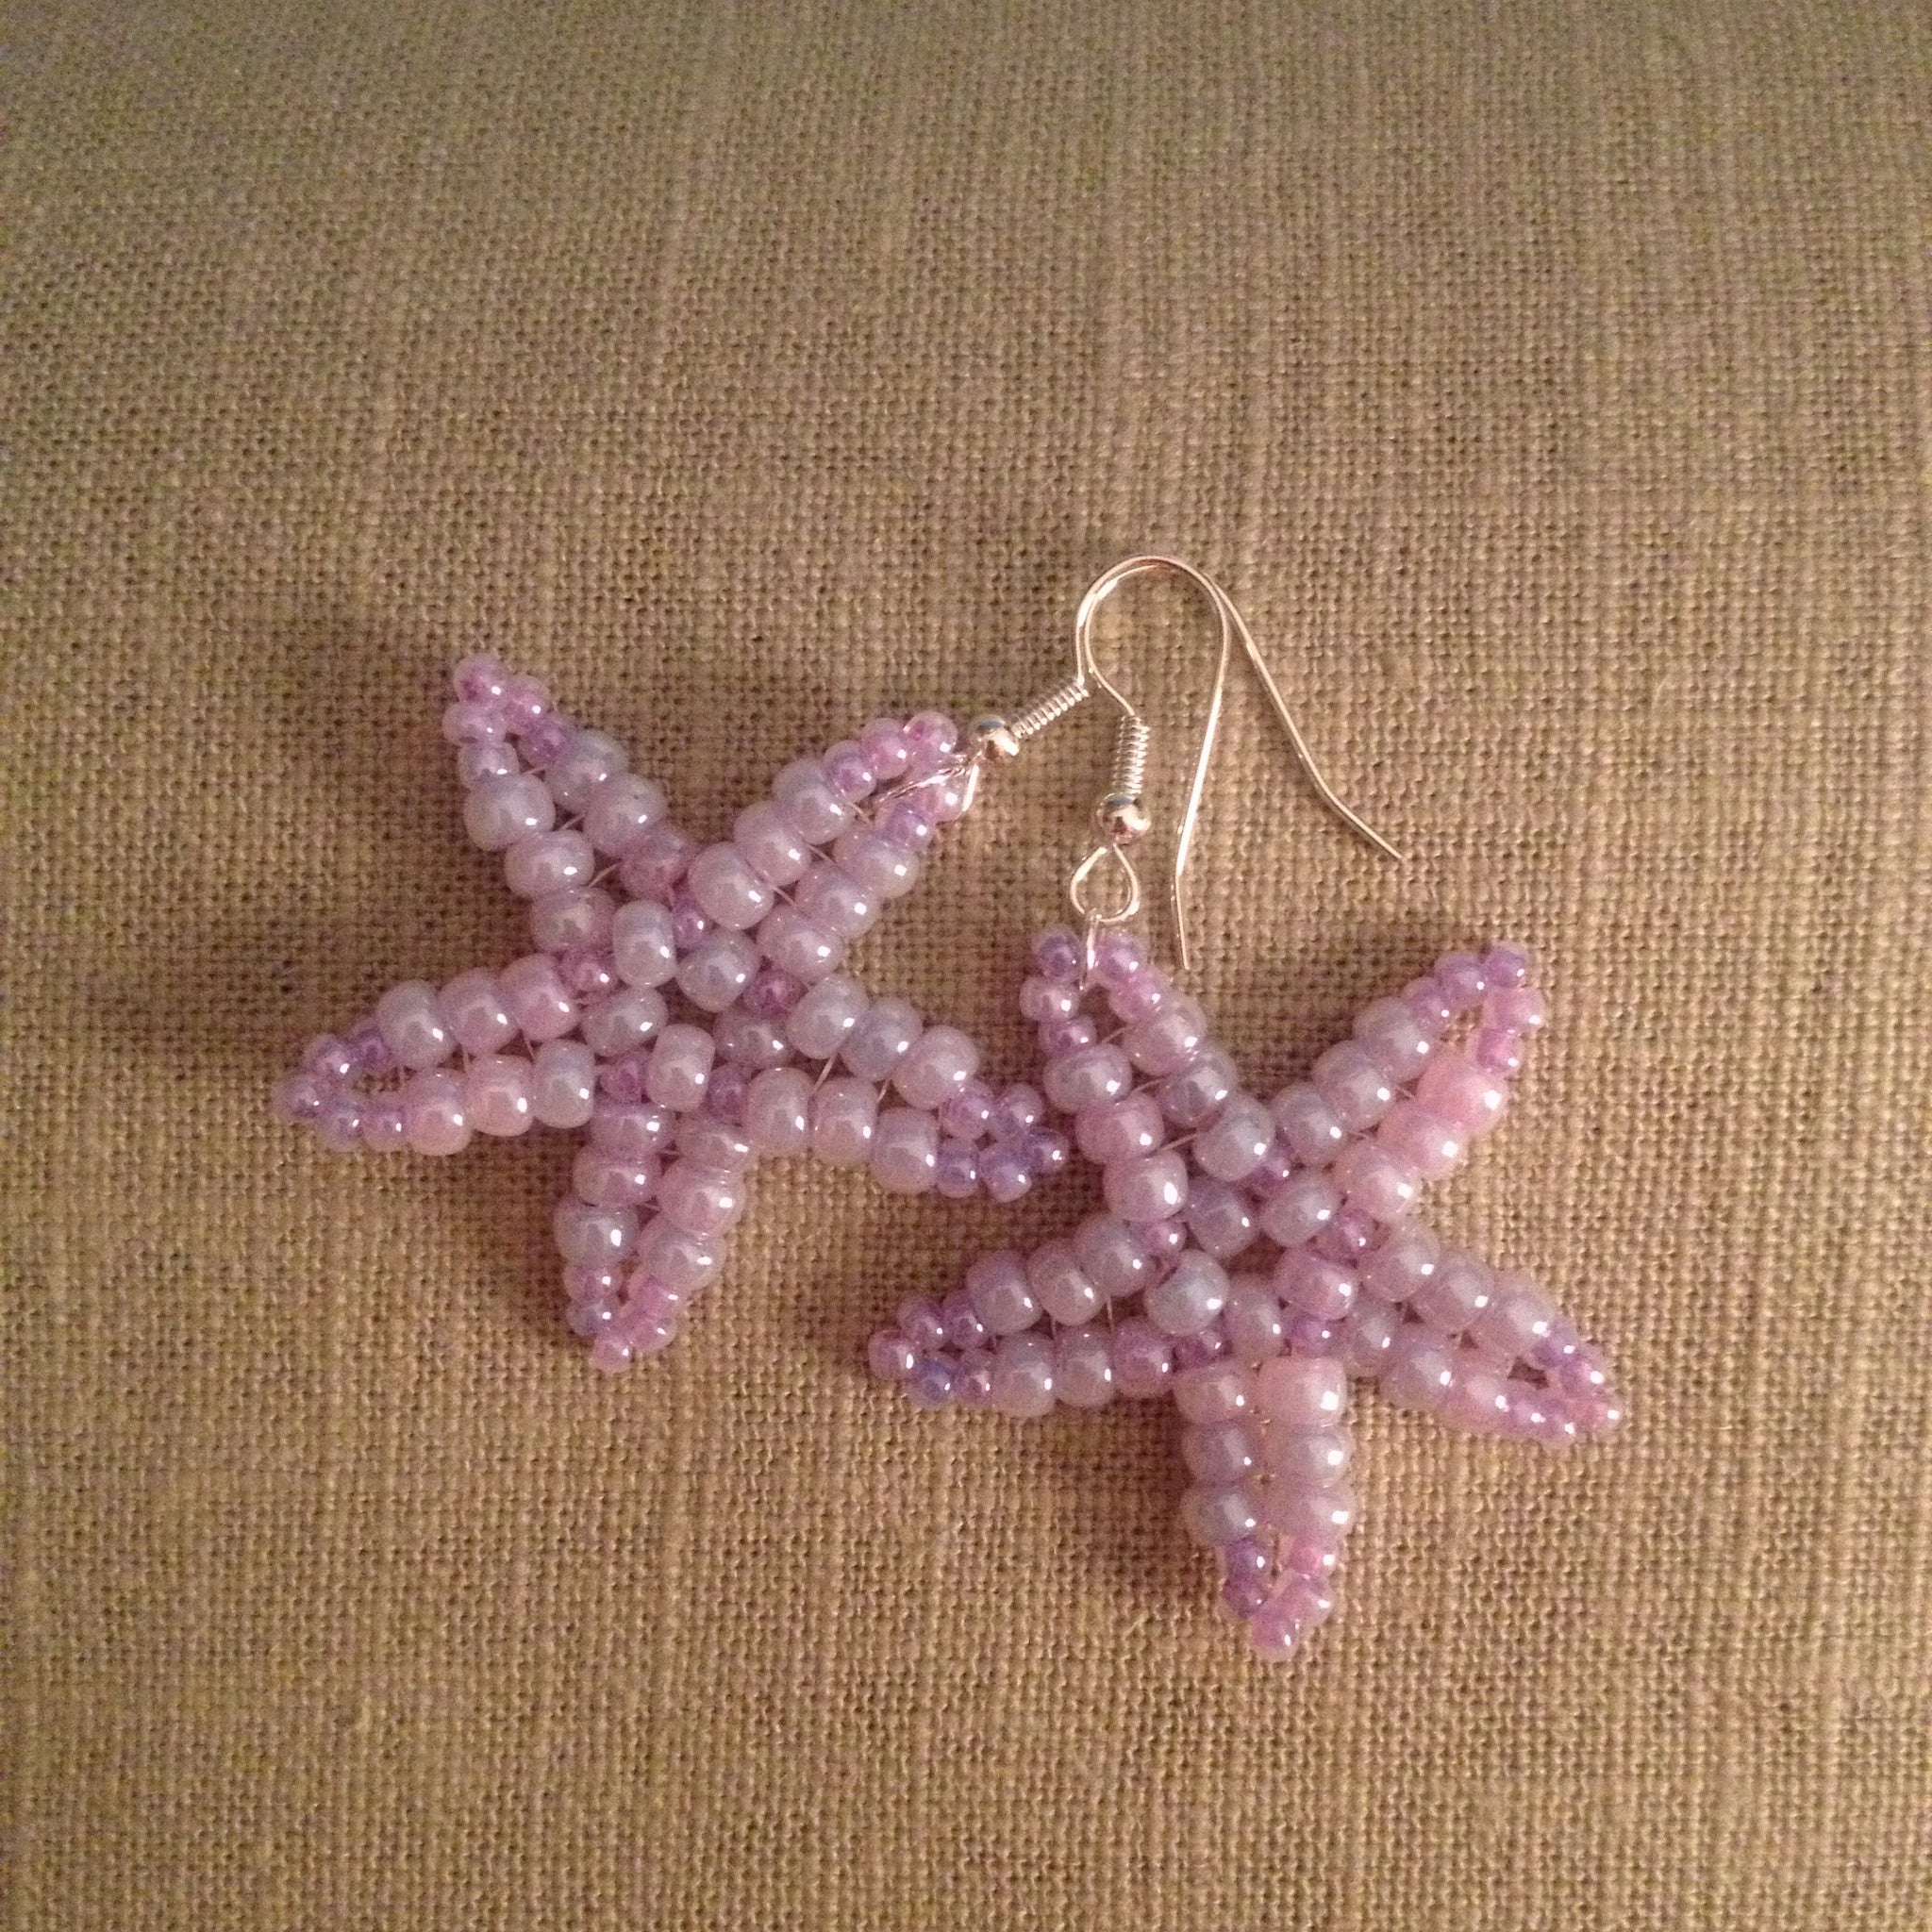 Starfish beaded handmade earrings in Lilac beachy fun resort cruise wear